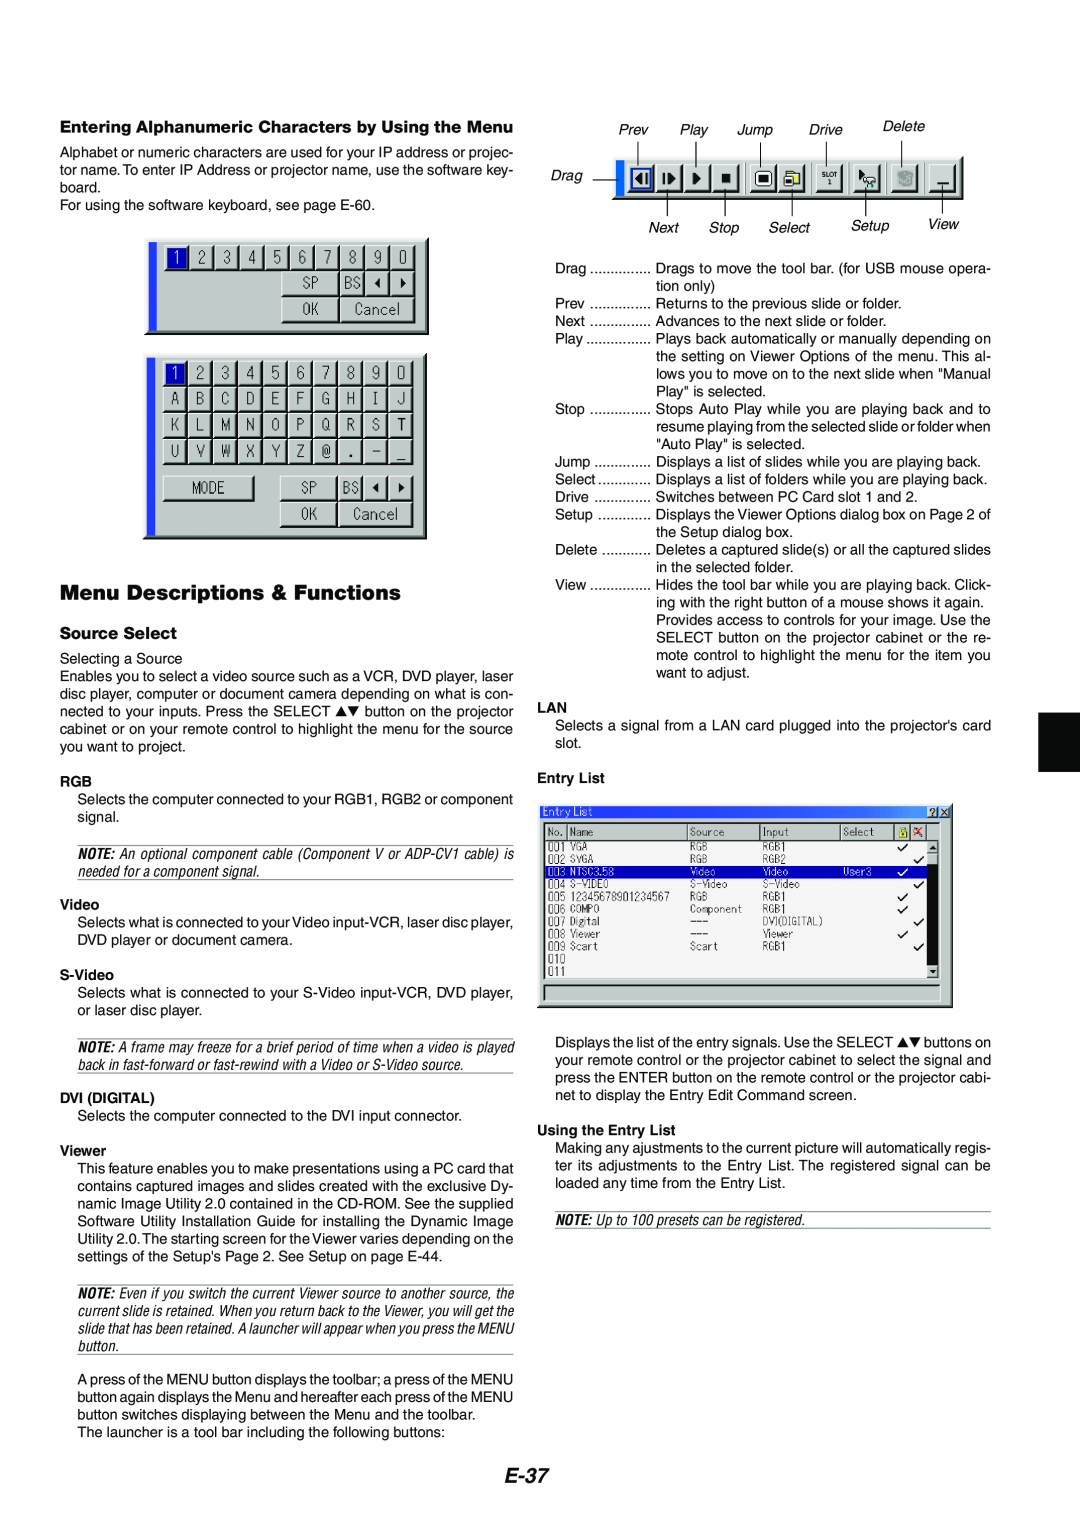 NEC MT1065/MT1060 Menu Descriptions & Functions, E-37, Entering Alphanumeric Characters by Using the Menu, Source Select 